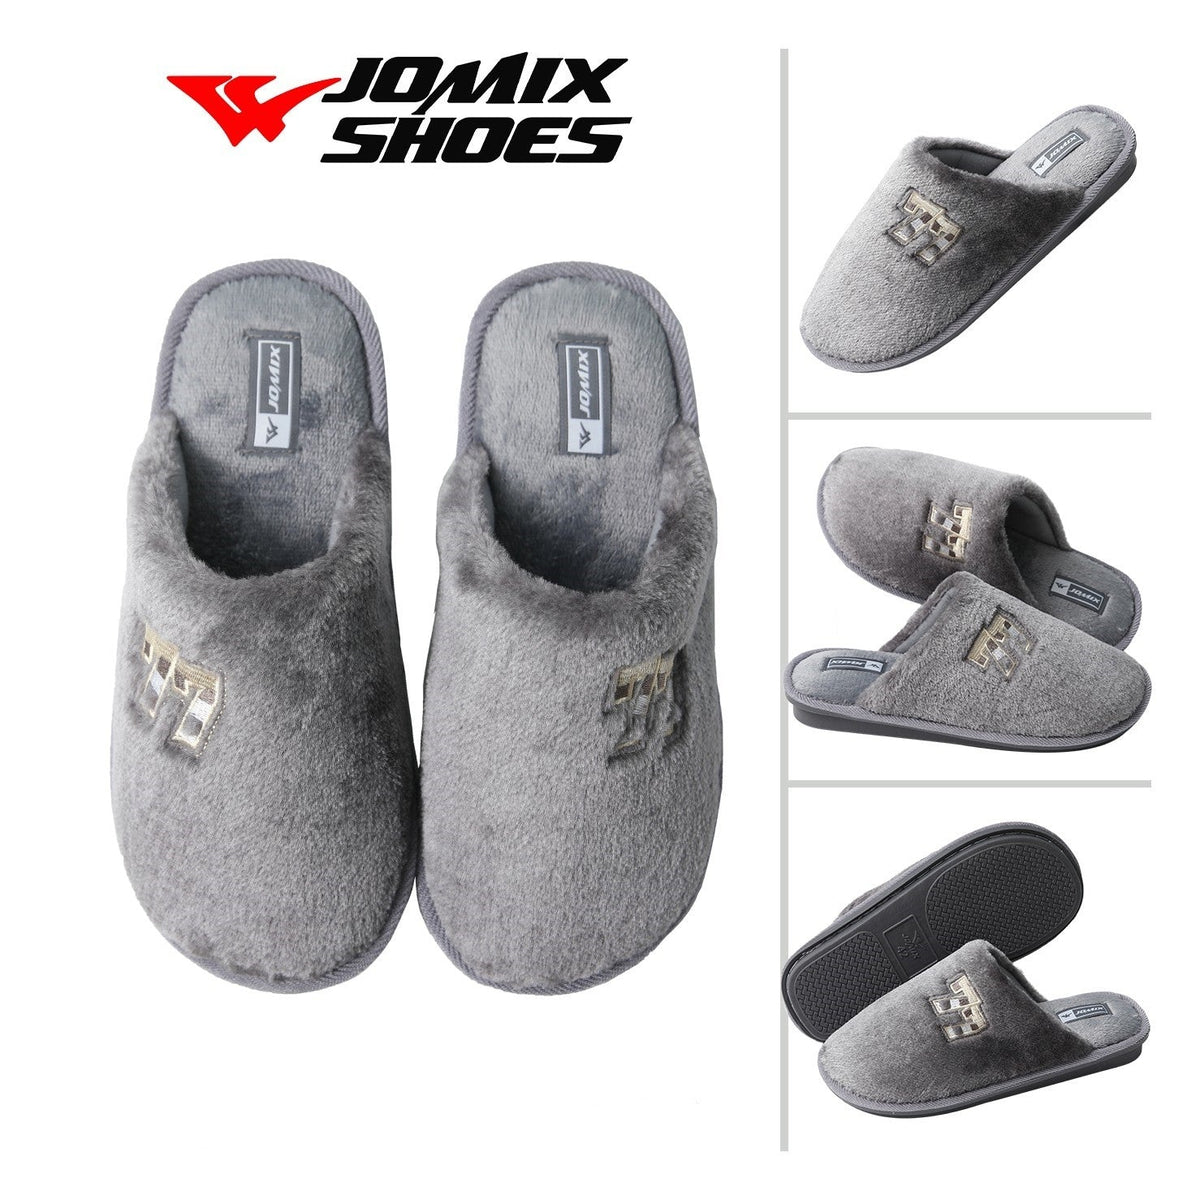 Pantofole da uomo invernali Jomix Shoes MU6020-4